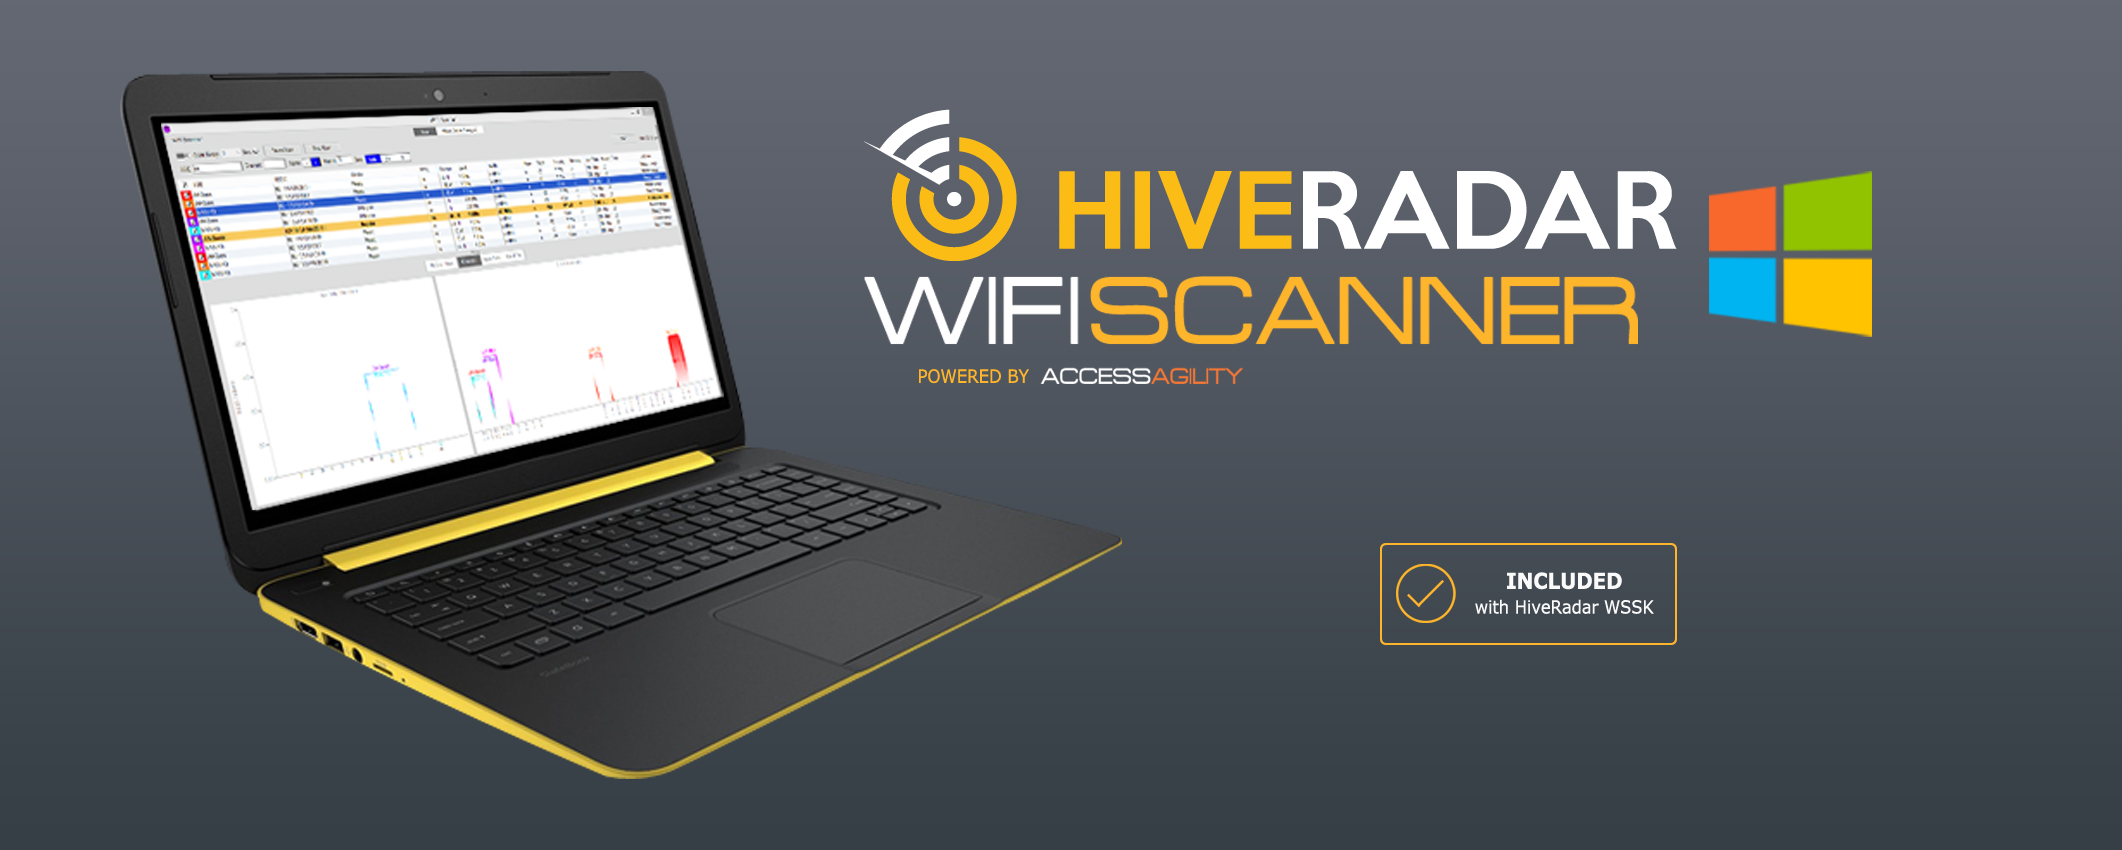 WiFi Scanner  HiveRadar Wireless Site Survey